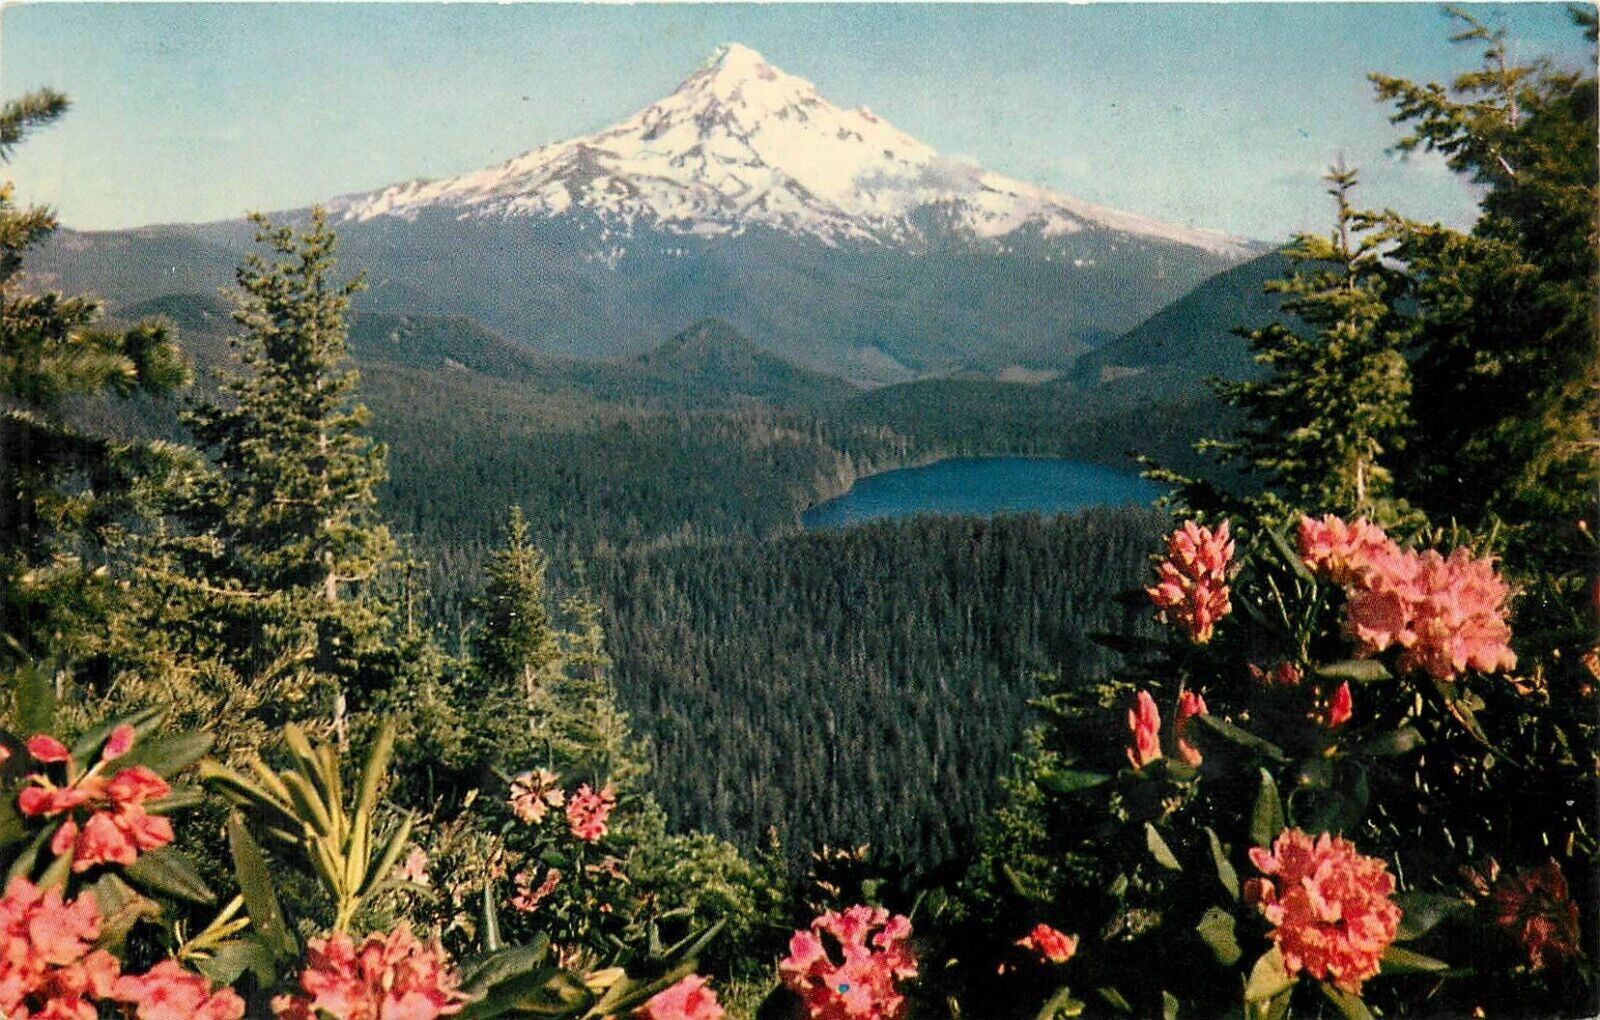 Mount Hood pm 1952 Postcard